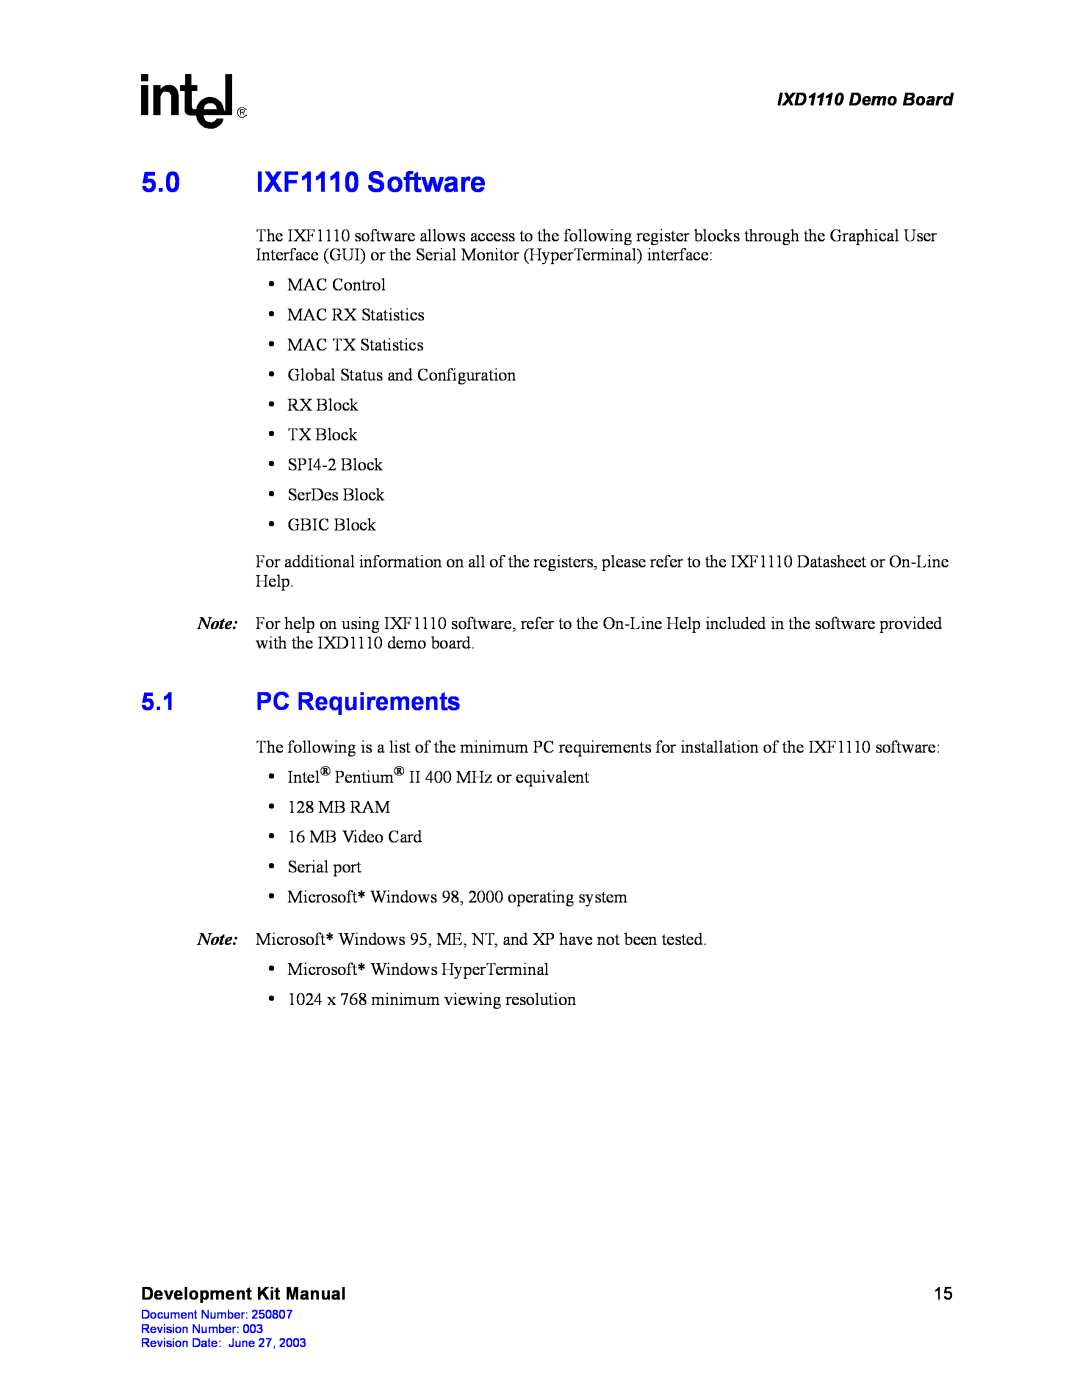 Intel manual 5.0 IXF1110 Software, PC Requirements, IXD1110 Demo Board, Development Kit Manual 